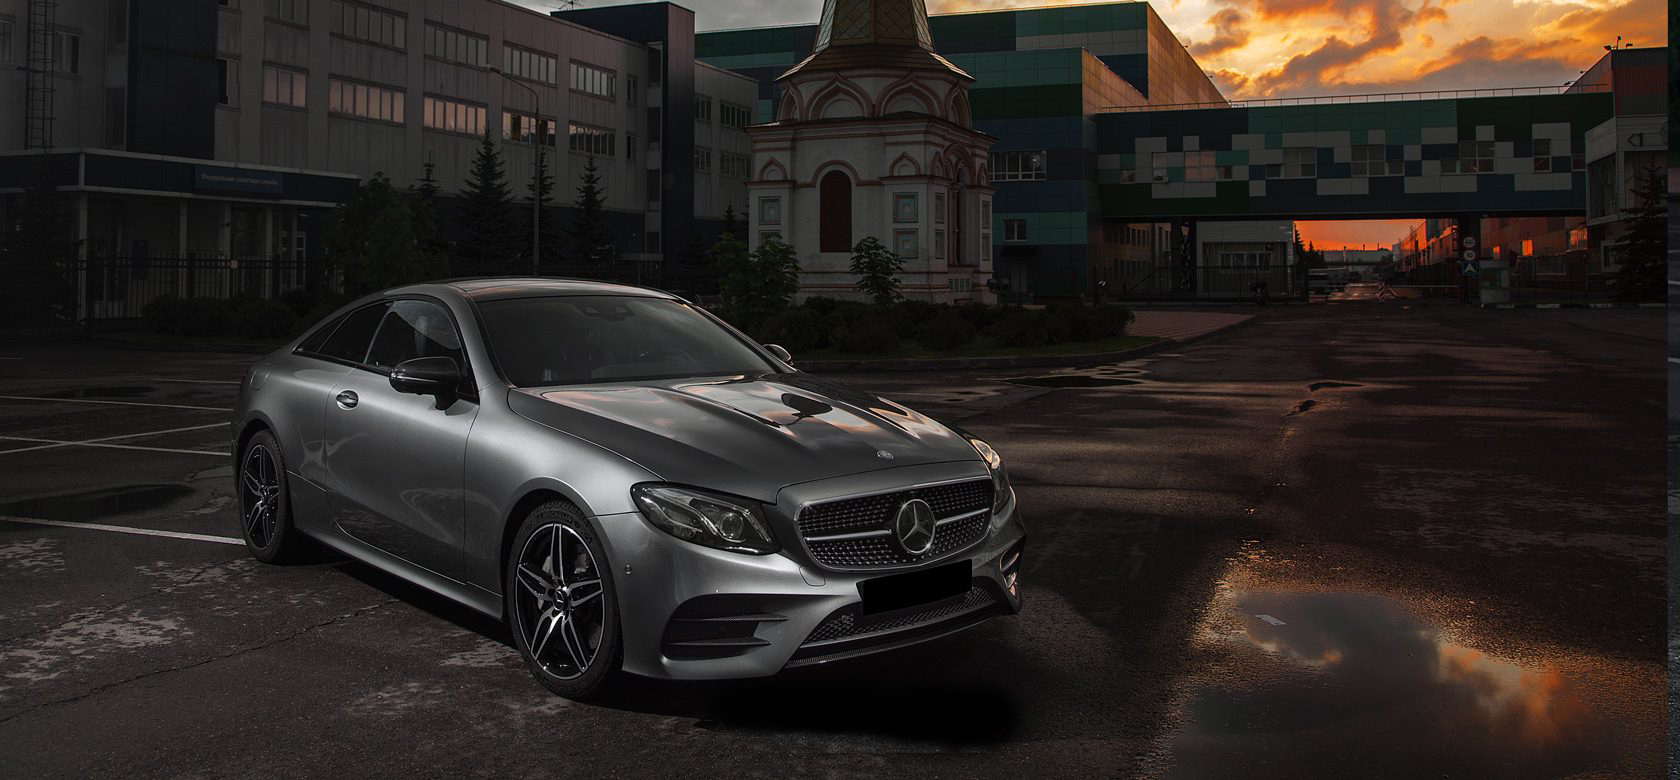 Hodoor Performance Carbon fiber Set for Mercedes E-class Coupe